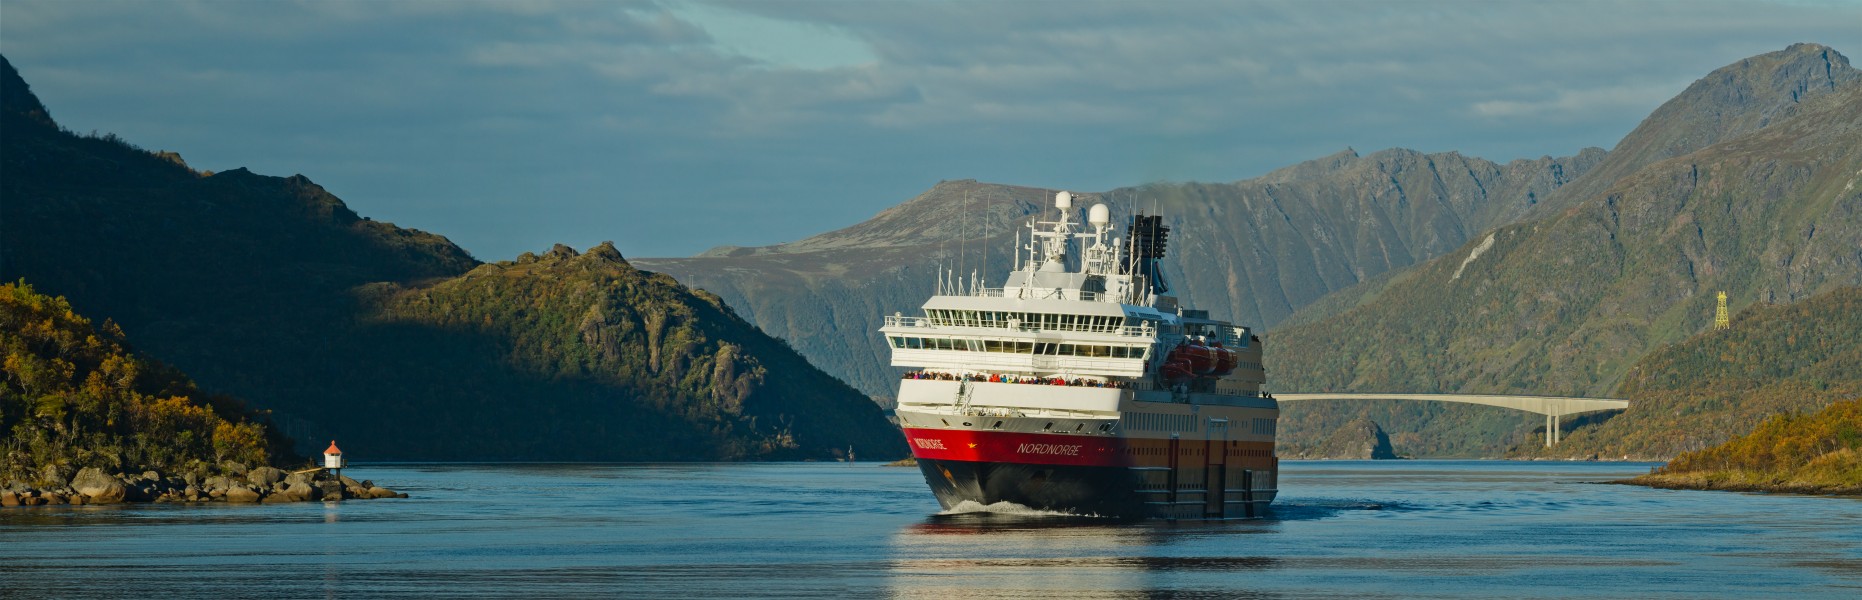 MS Nordnorge, Hurtigruten in Raftsundet, Nordland, Norway, 2015 September